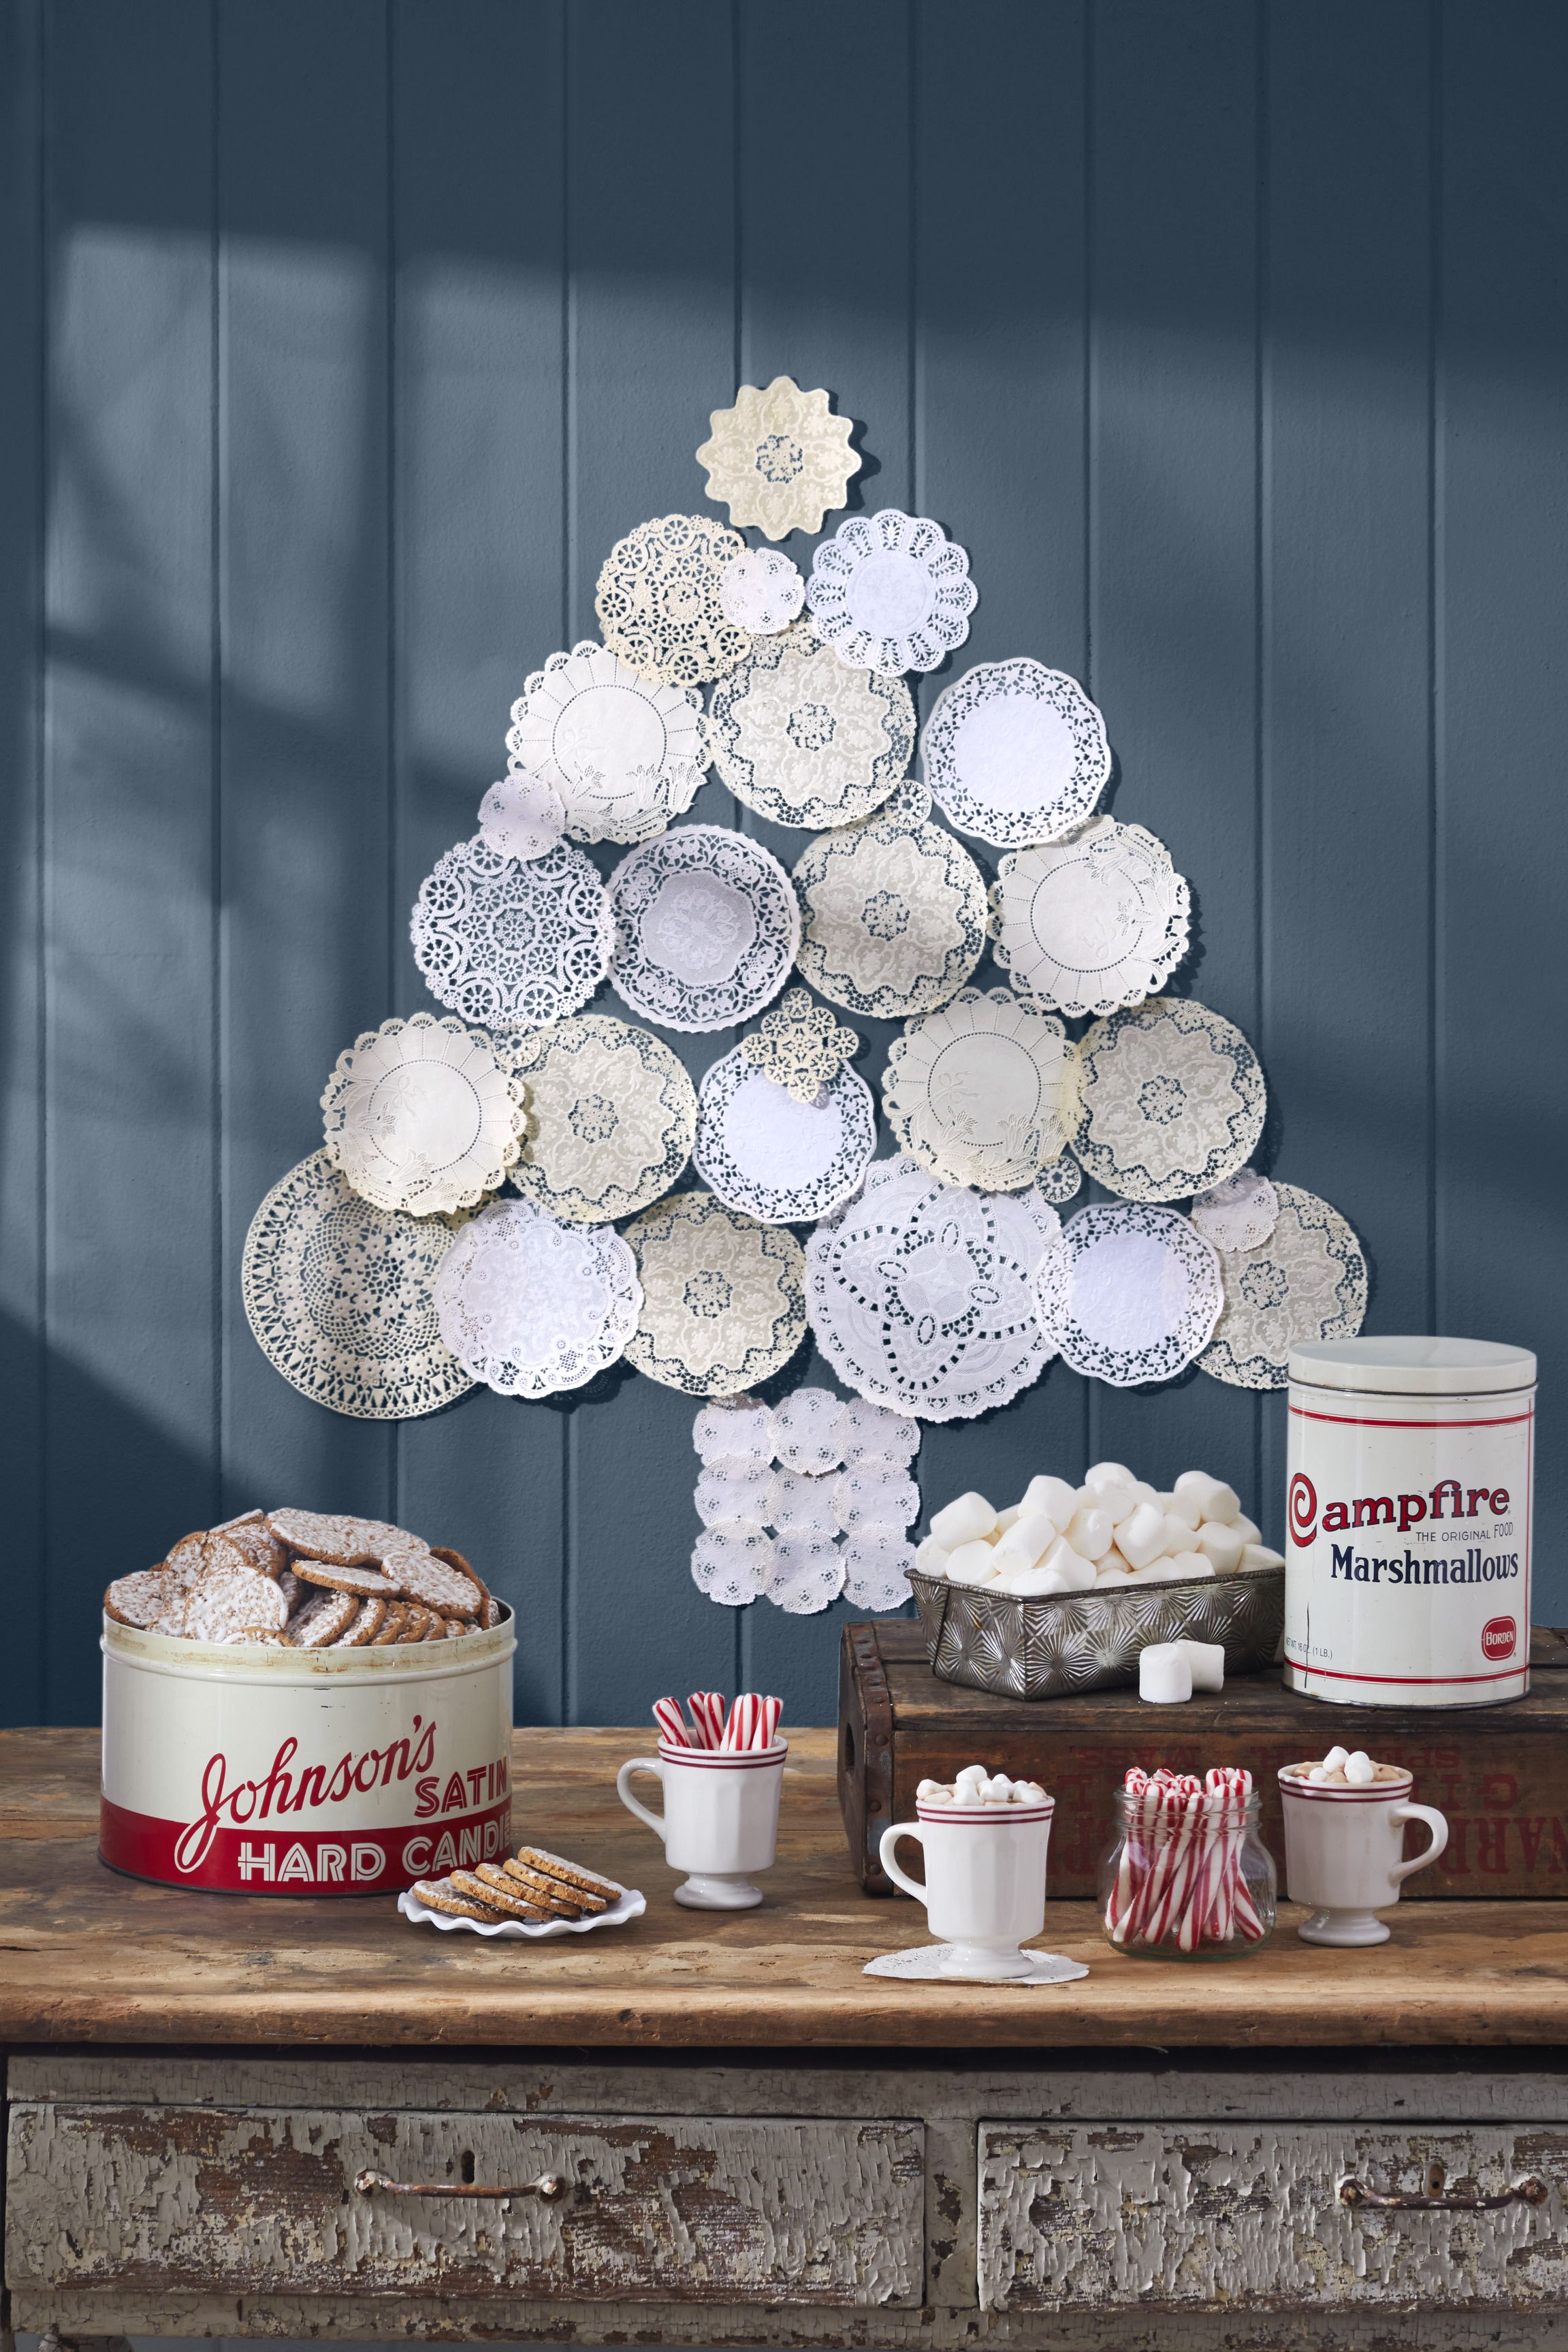 10 Pieces Blank White Cylinder Shape Styrofoam Foam Material for Kids Art  Craft DIY Christmas Ornament Decoration